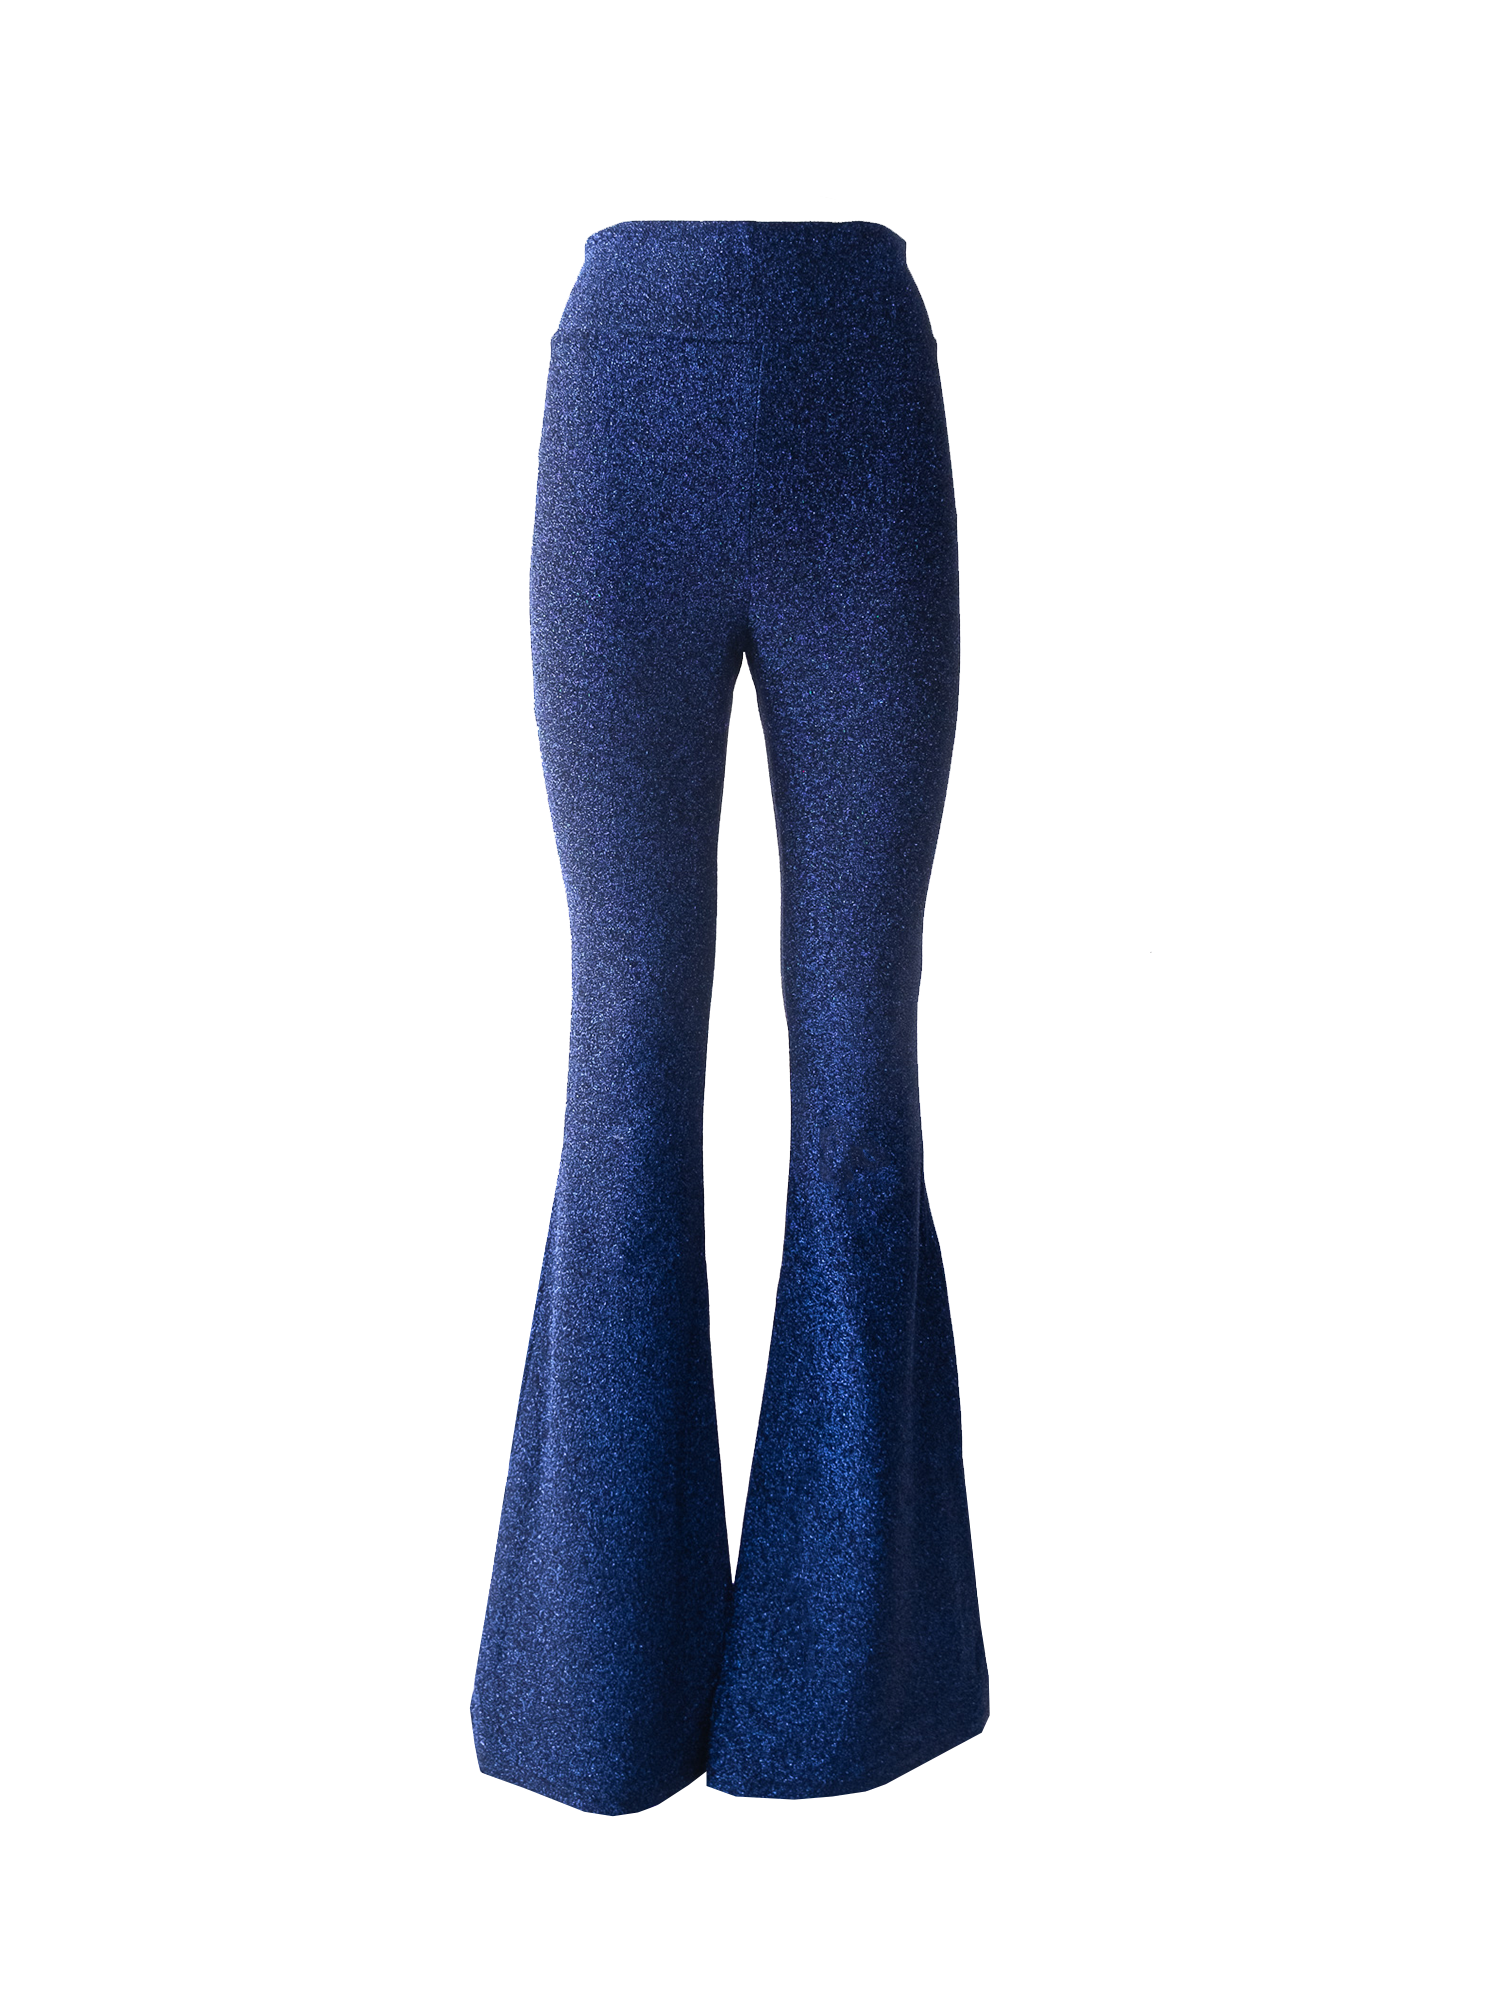 LOLA - flared pants in blue lurex